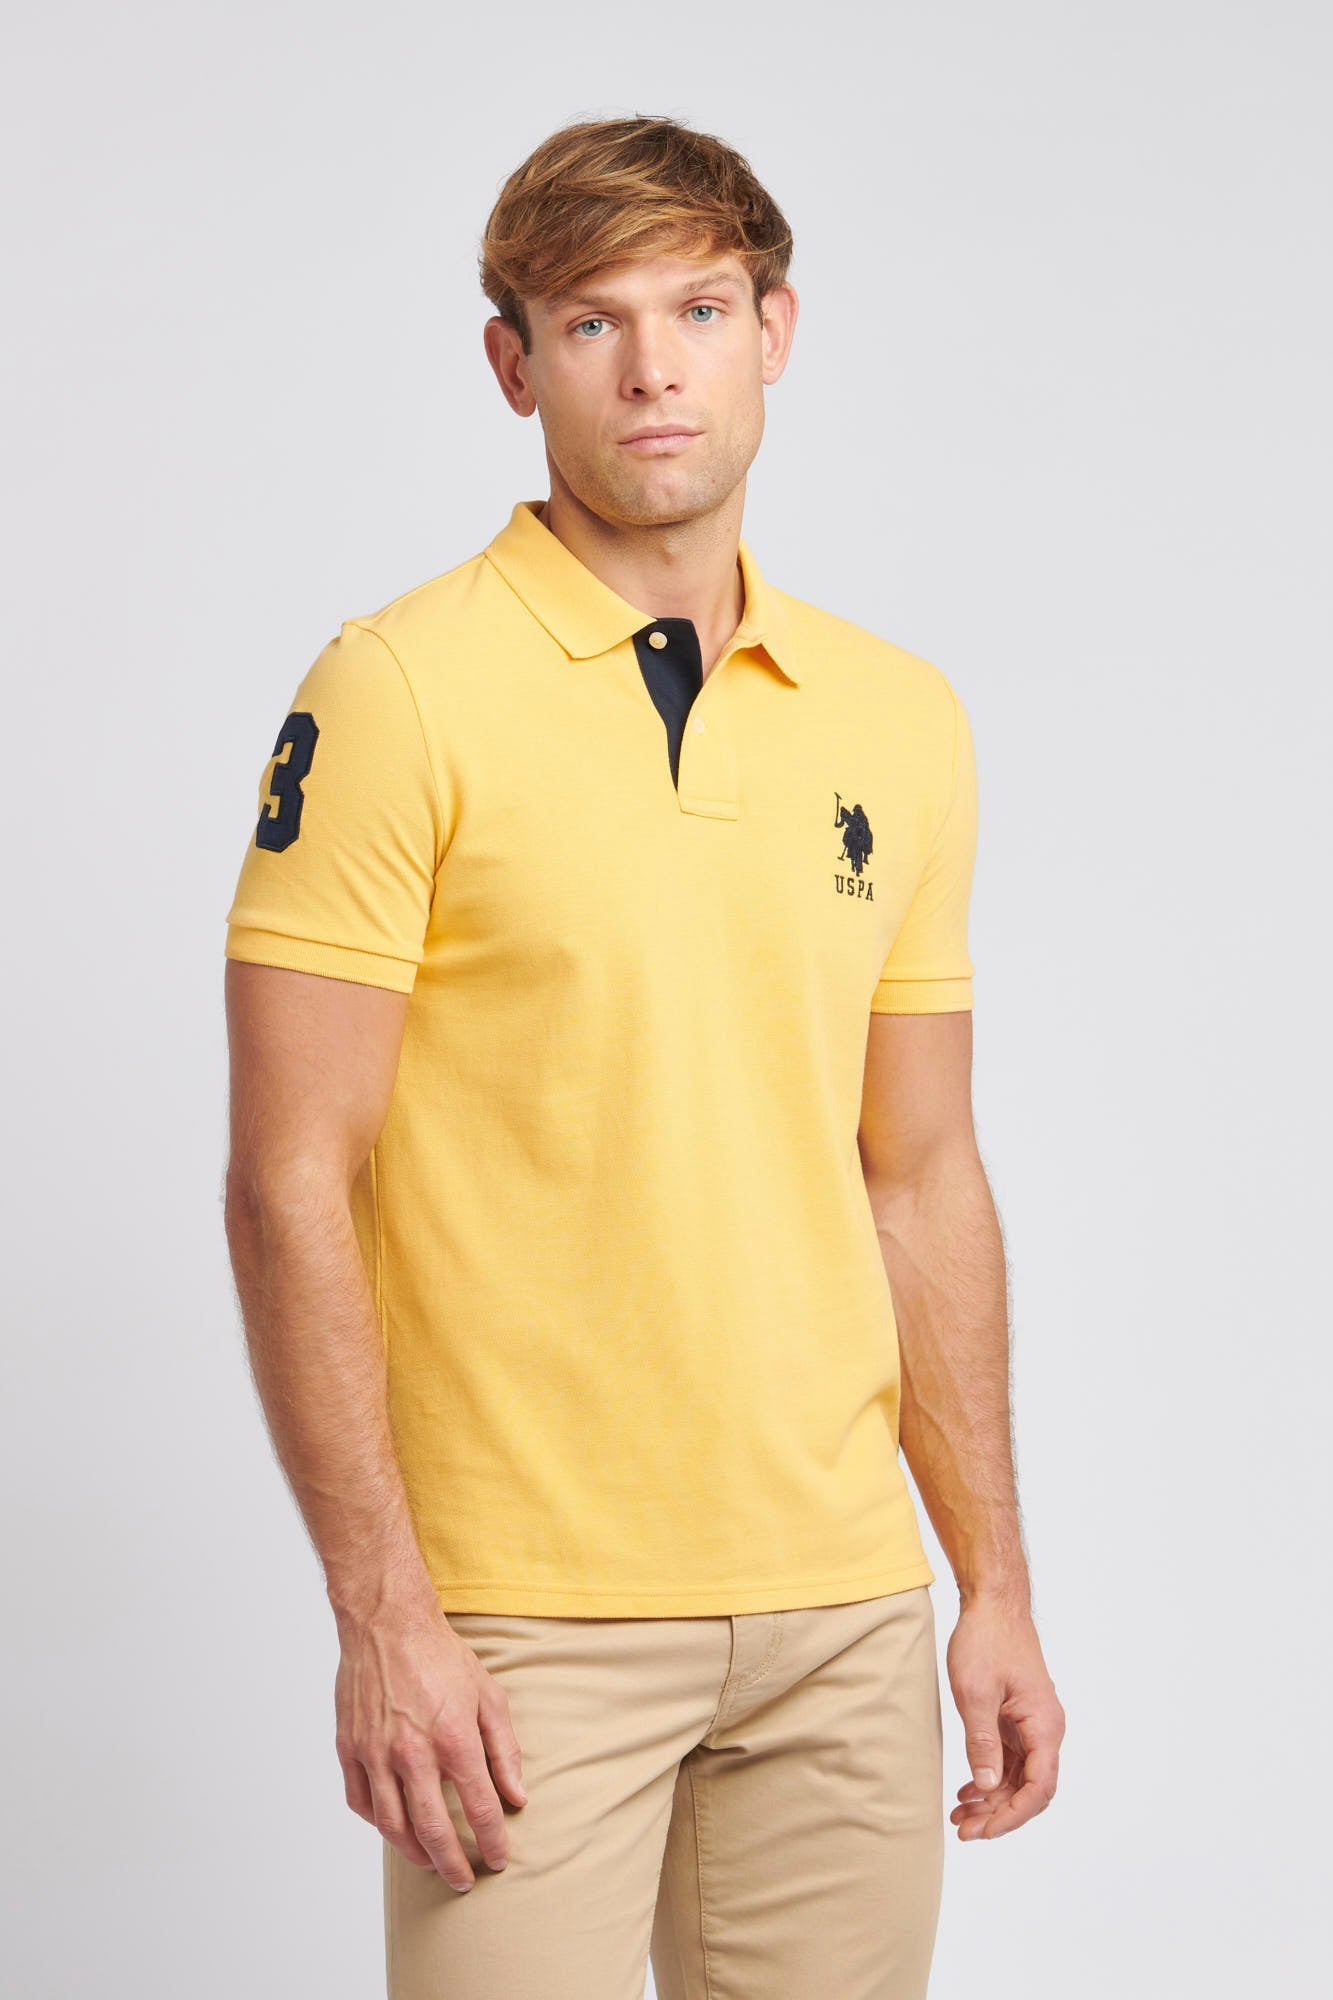 U.S. Polo Assn. Mens Player 3 Pique Polo Shirt in Sunset Gold